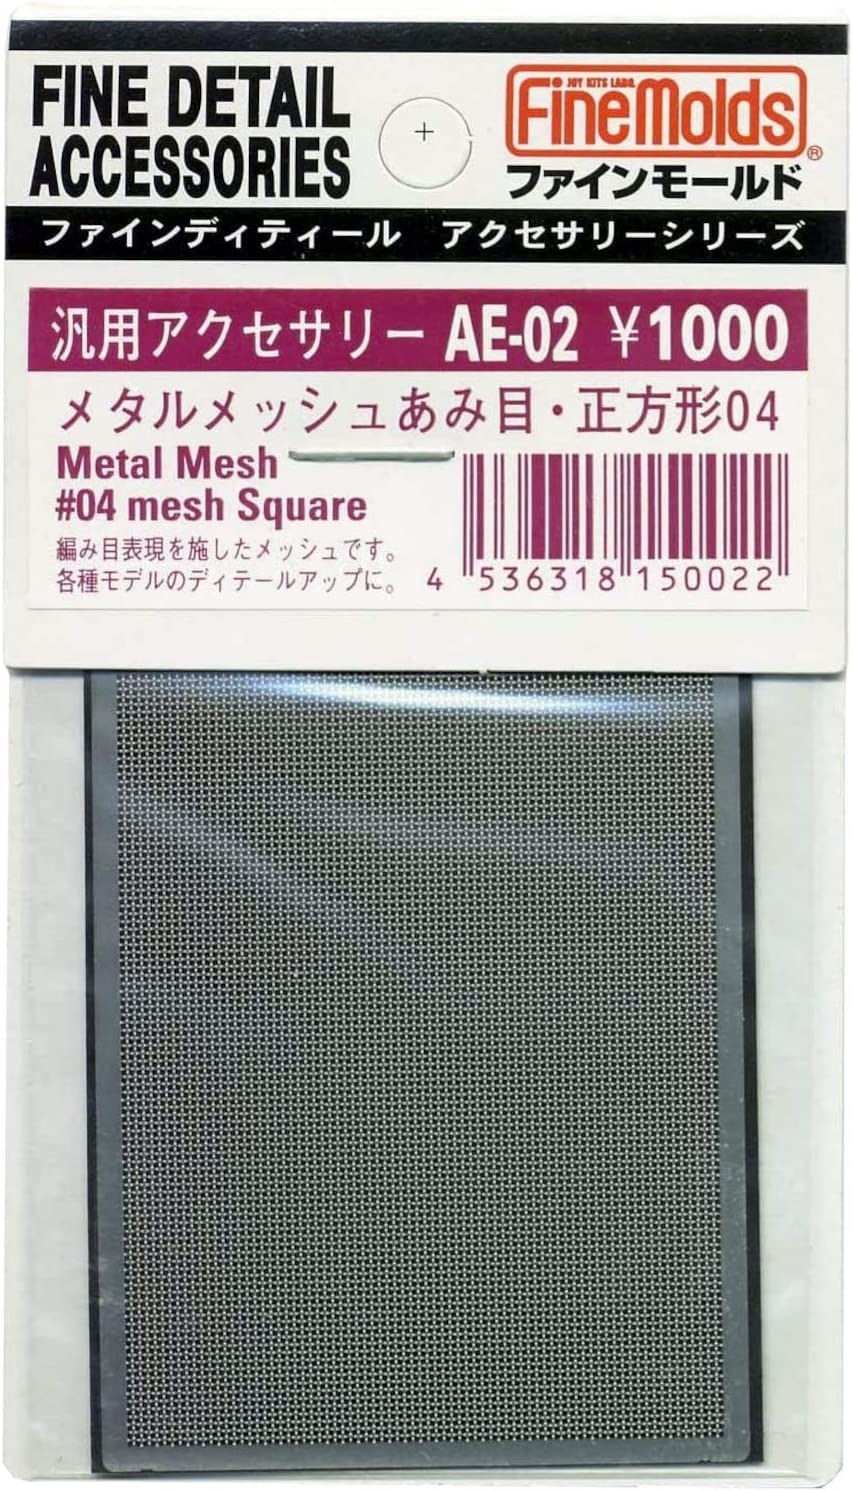 Metal Mesh #04 mesh Square